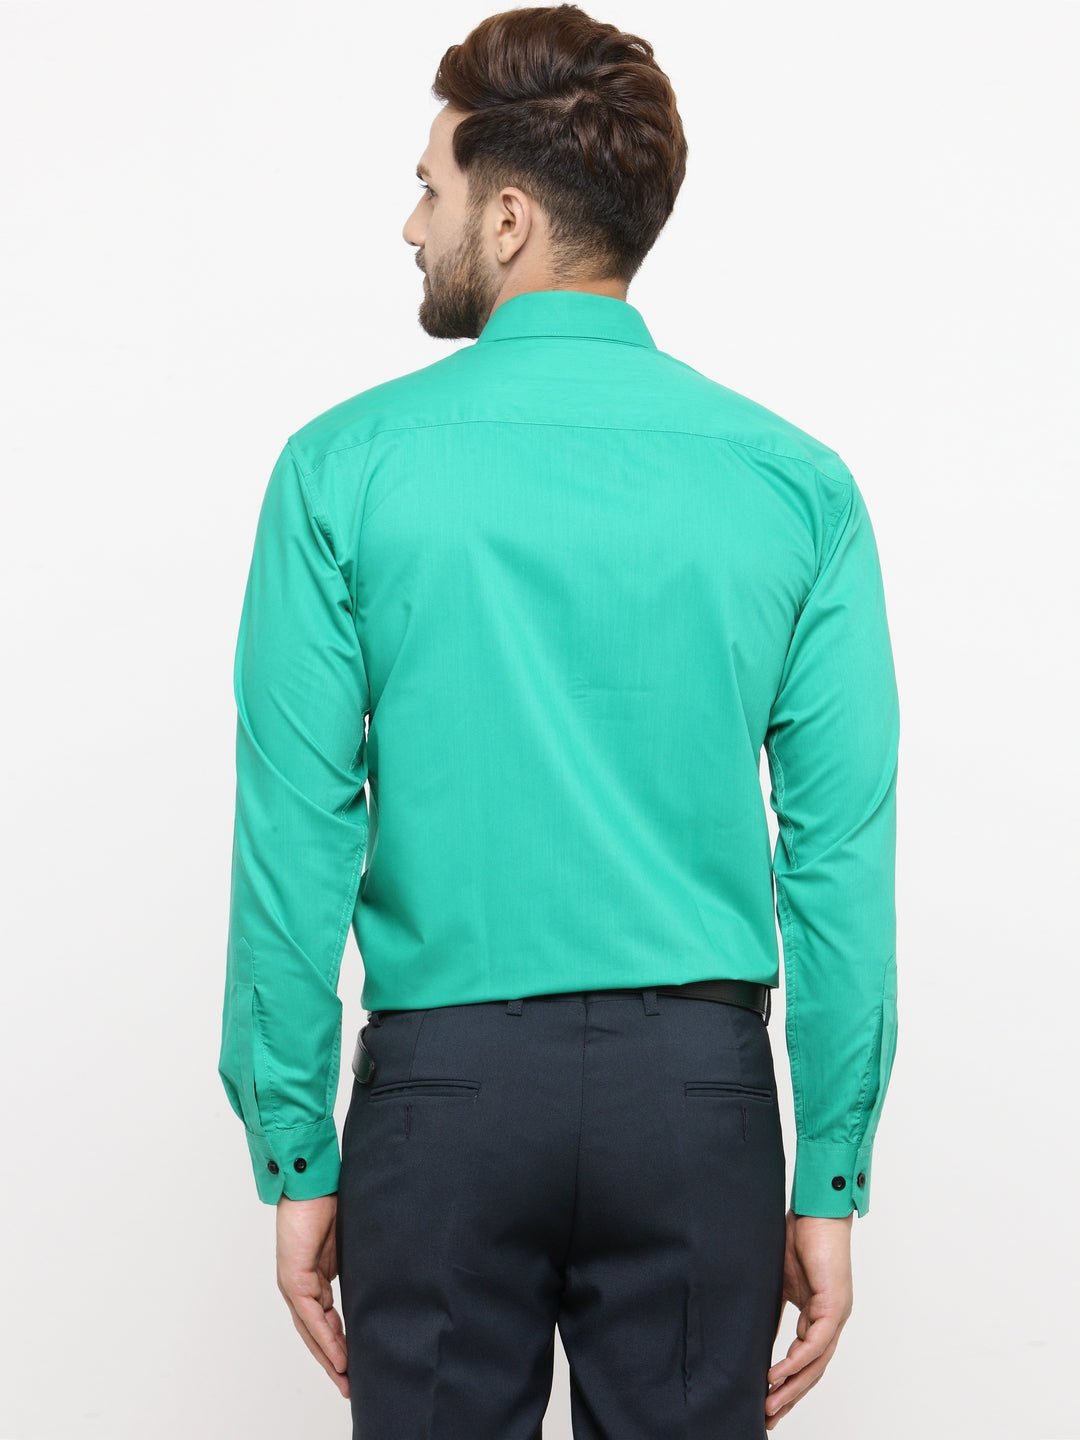 Men's Green Formal Shirt with black detailing ( SF 411Green ) - Jainish